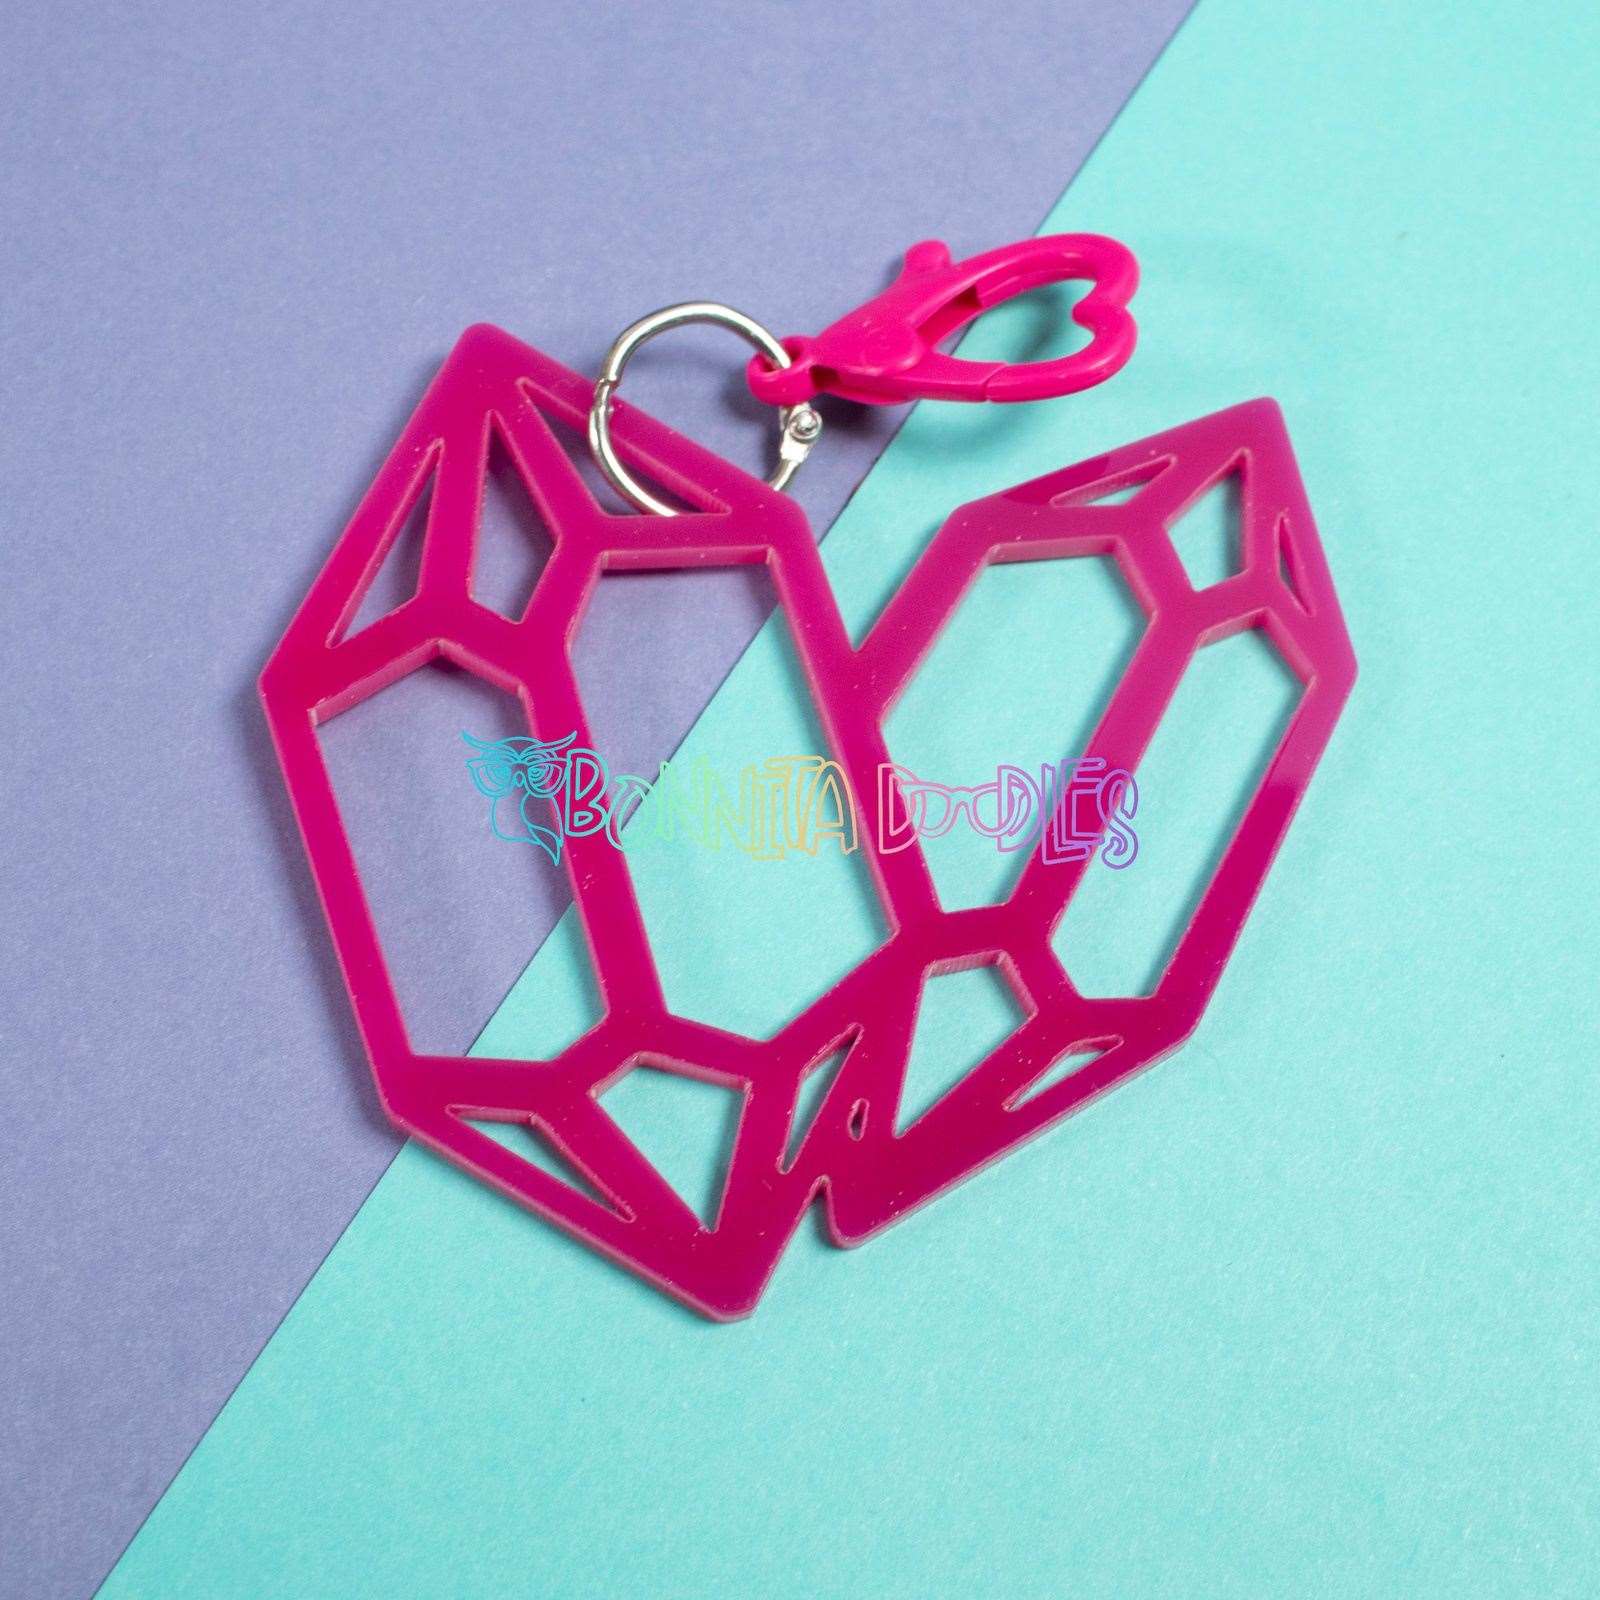 Duo Geode Pink Key - Bag Charm